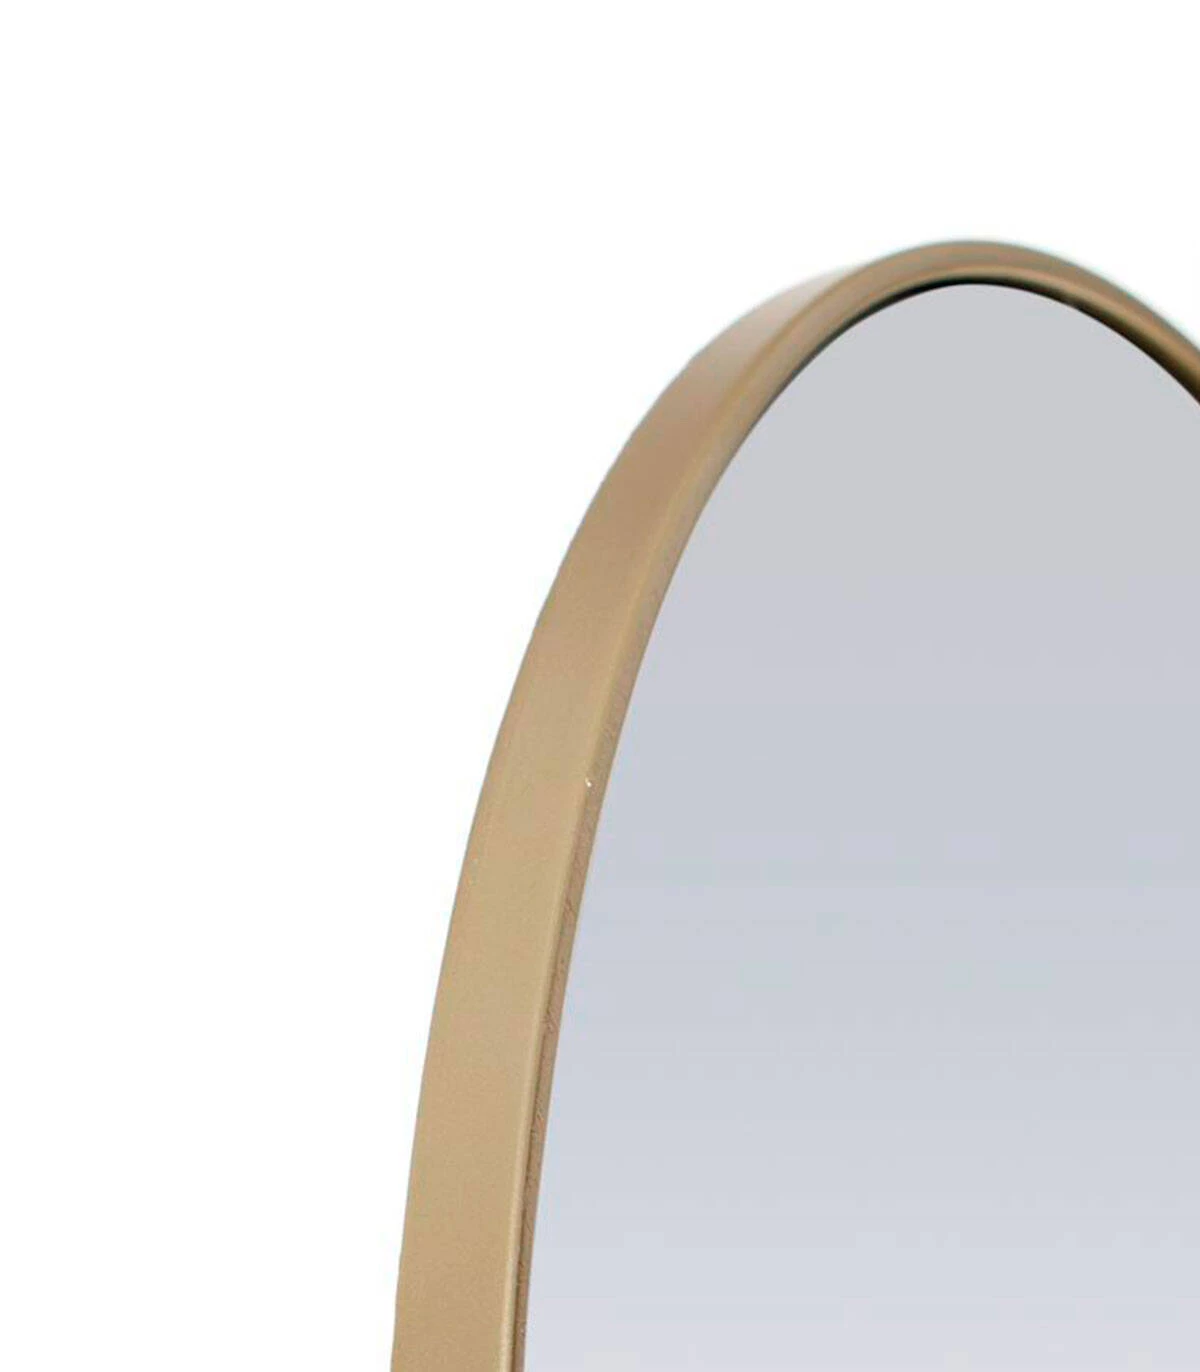 Espejo de pared ovalado de metal color dorado varias medidas